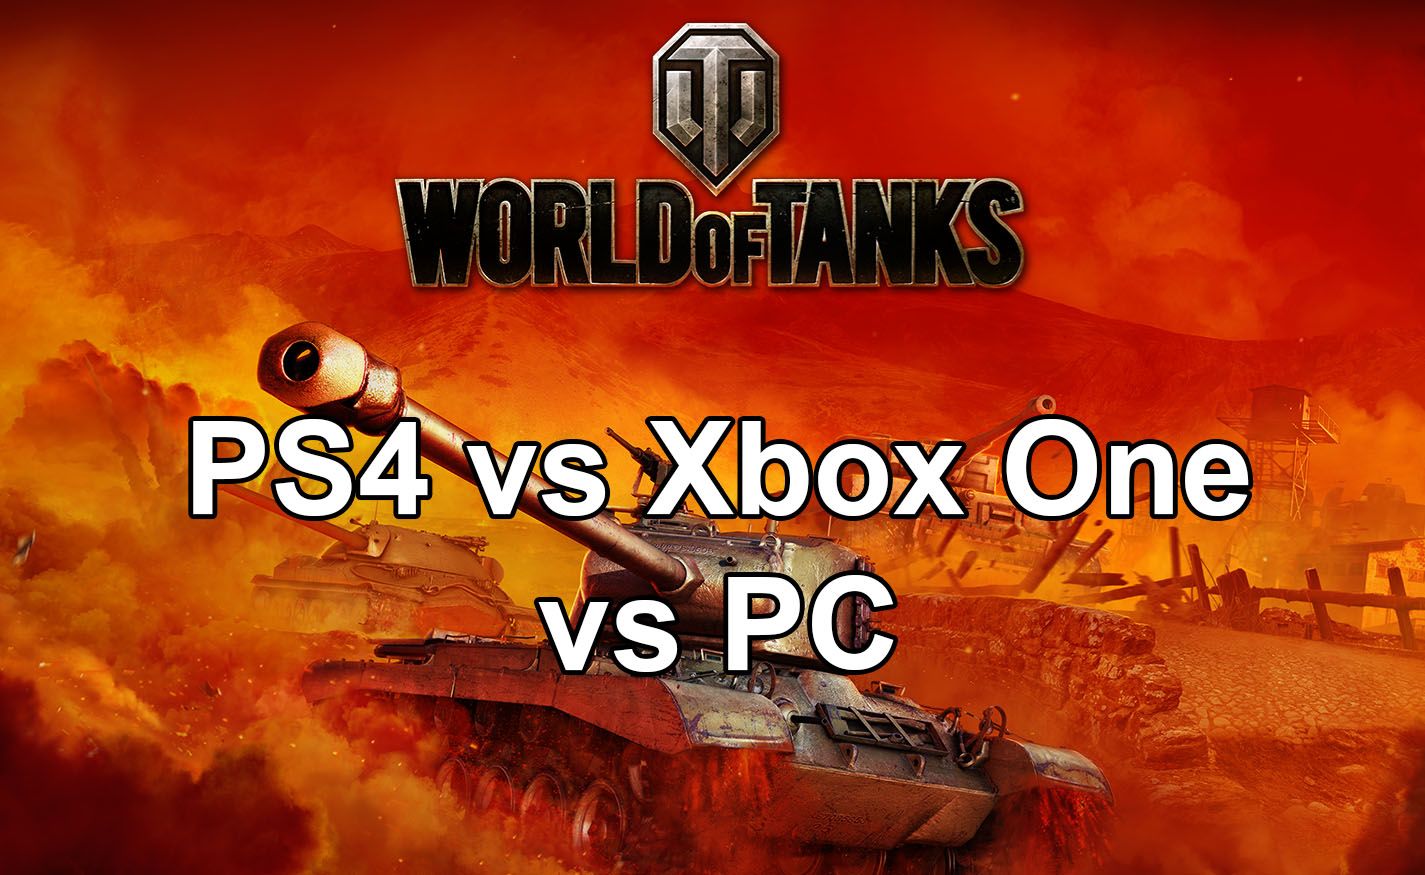 World of Tanks PS4 vs Xbox vs PC Screenshot Comparison: Definitely Not Simple